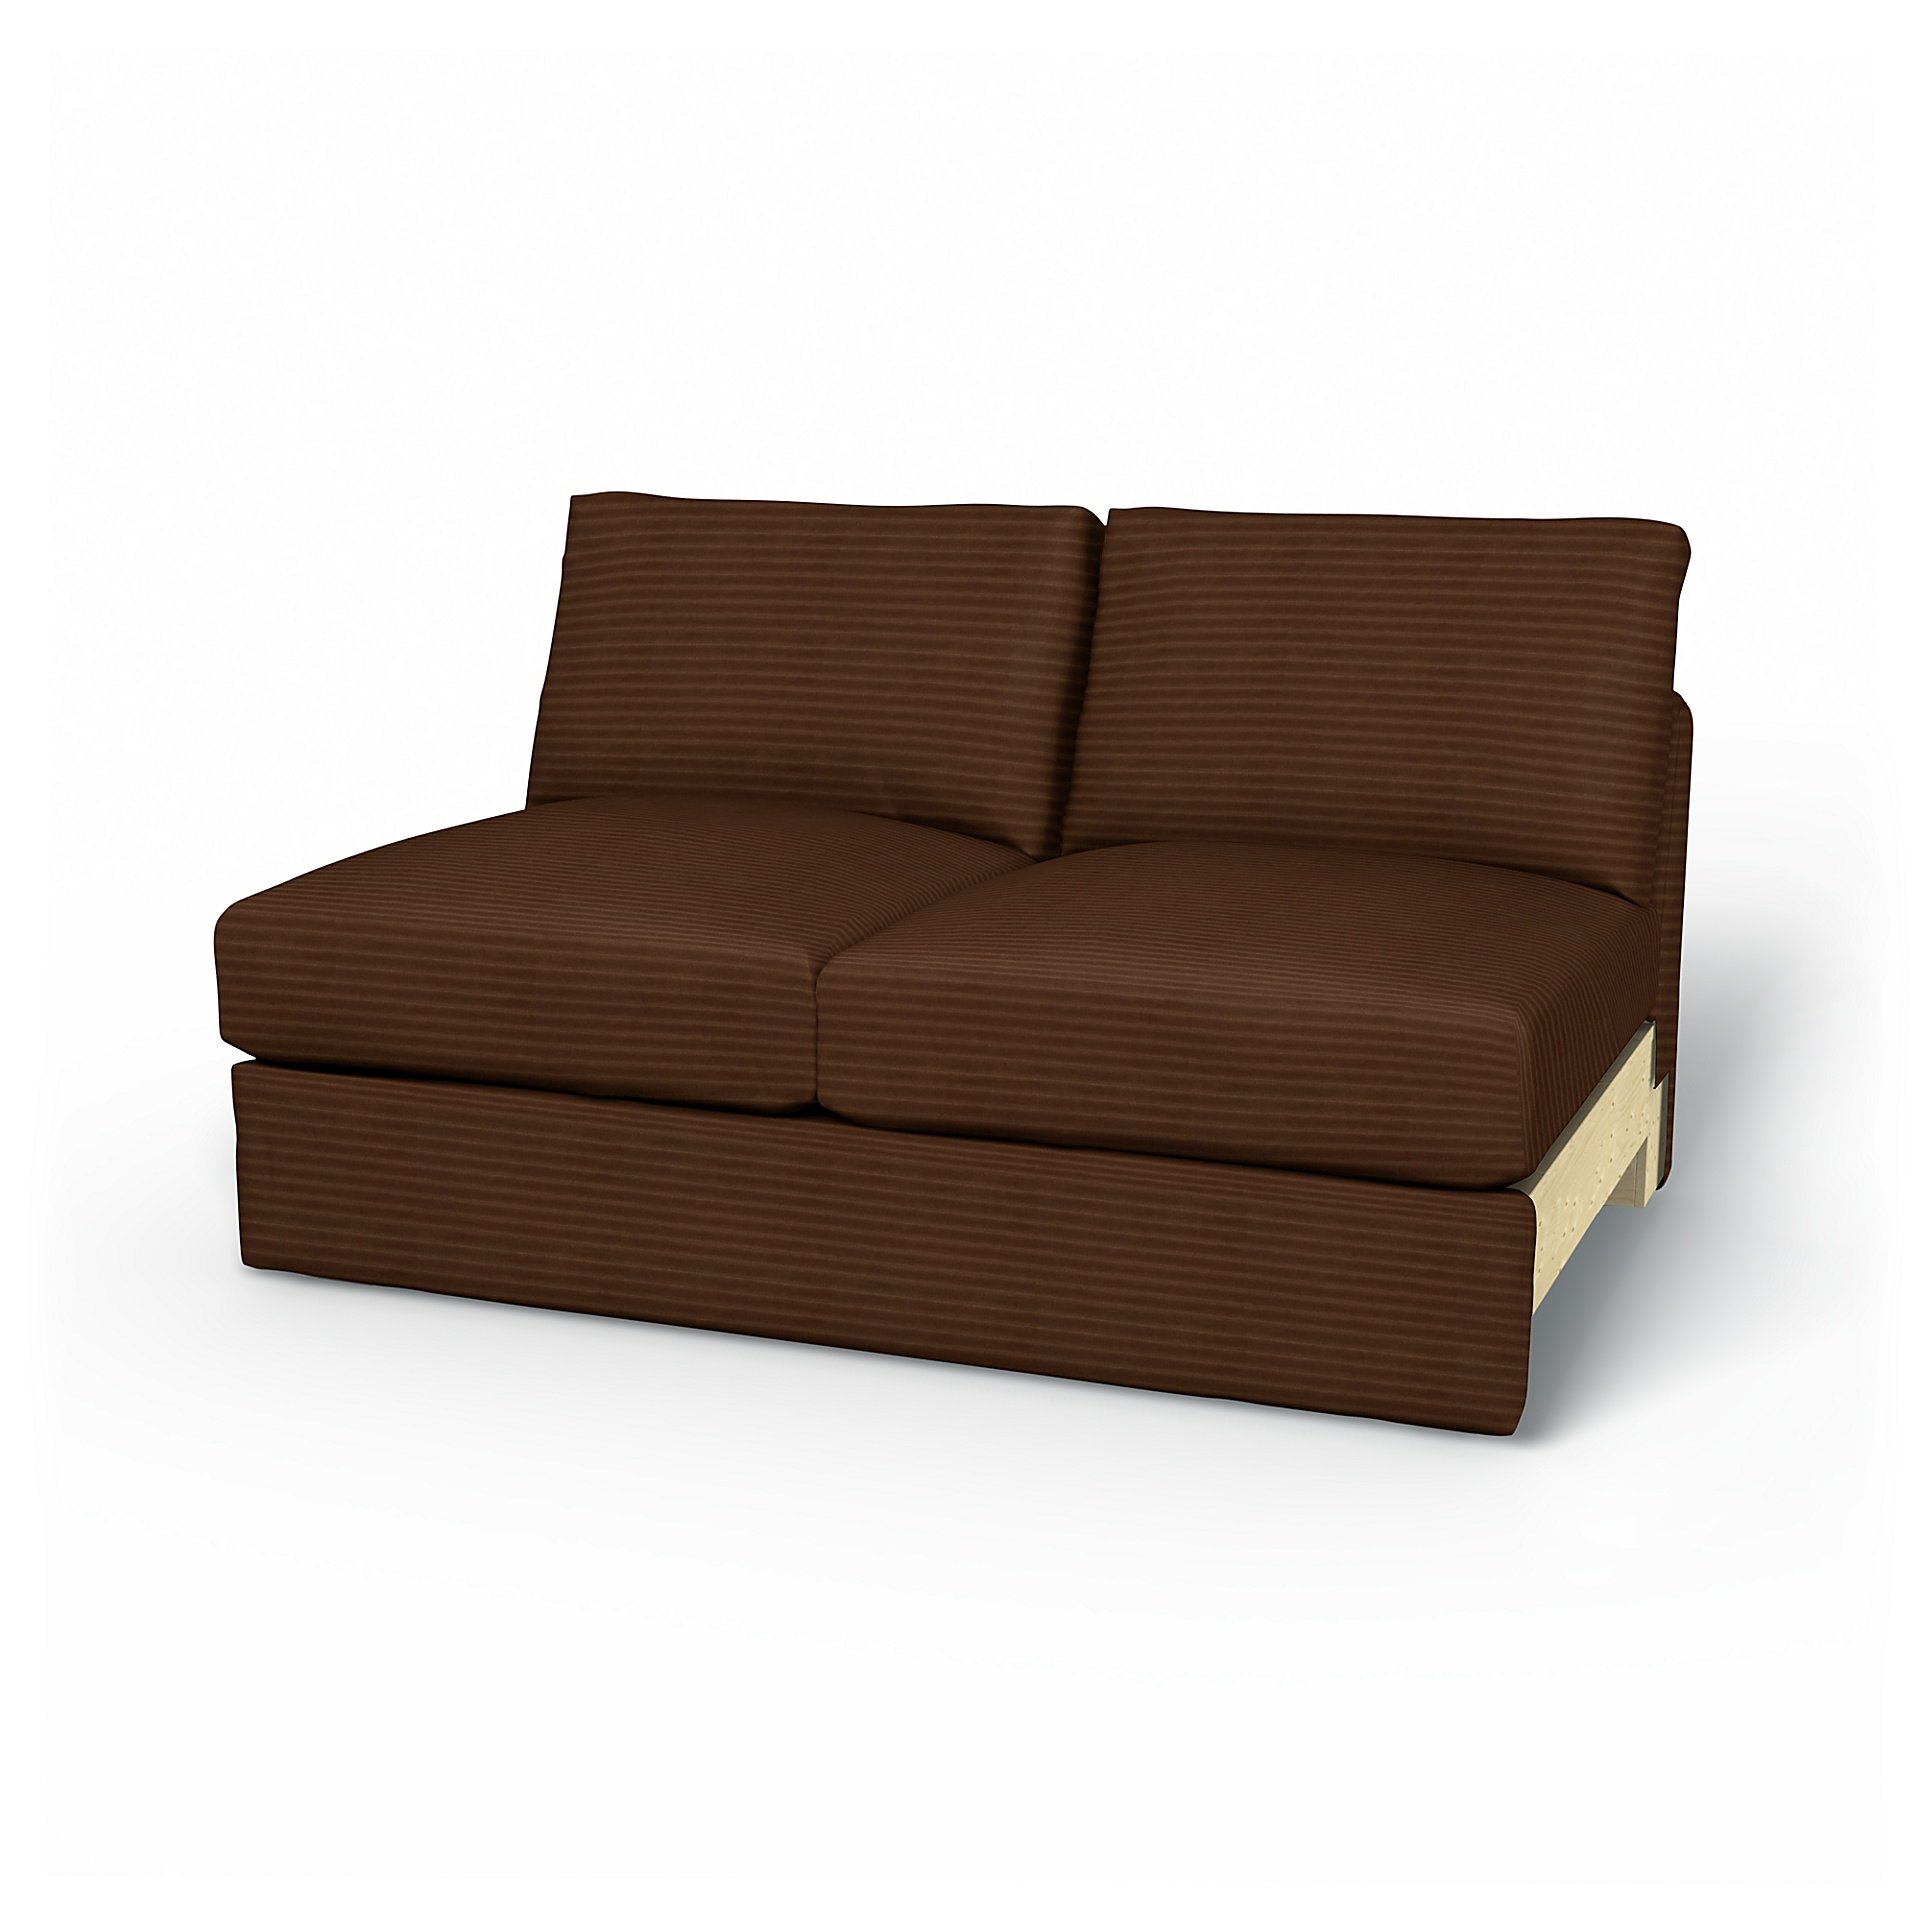 IKEA - Vimle 2 Seat Section Cover, Chocolate Brown, Corduroy - Bemz